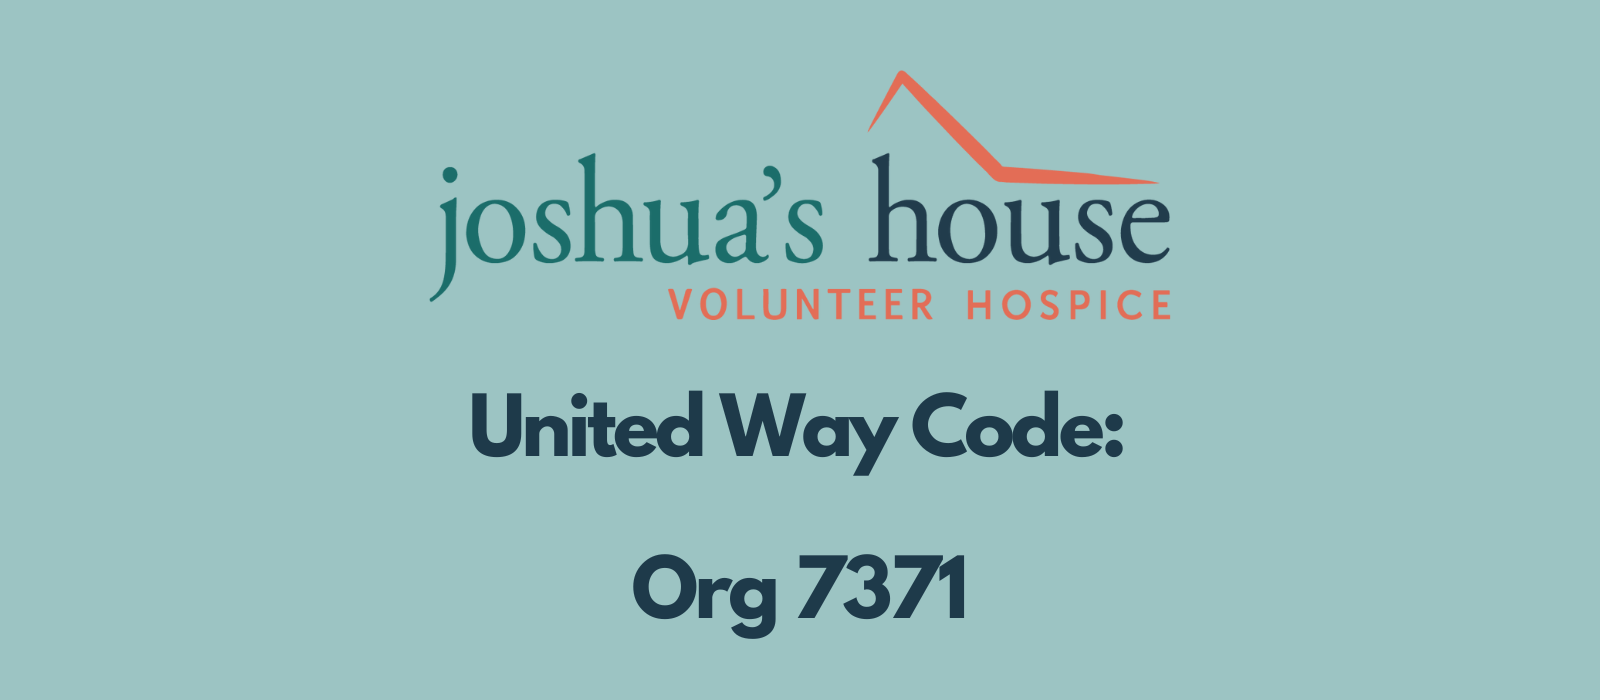 Joshua's House Volunteer Hospice United Way Code